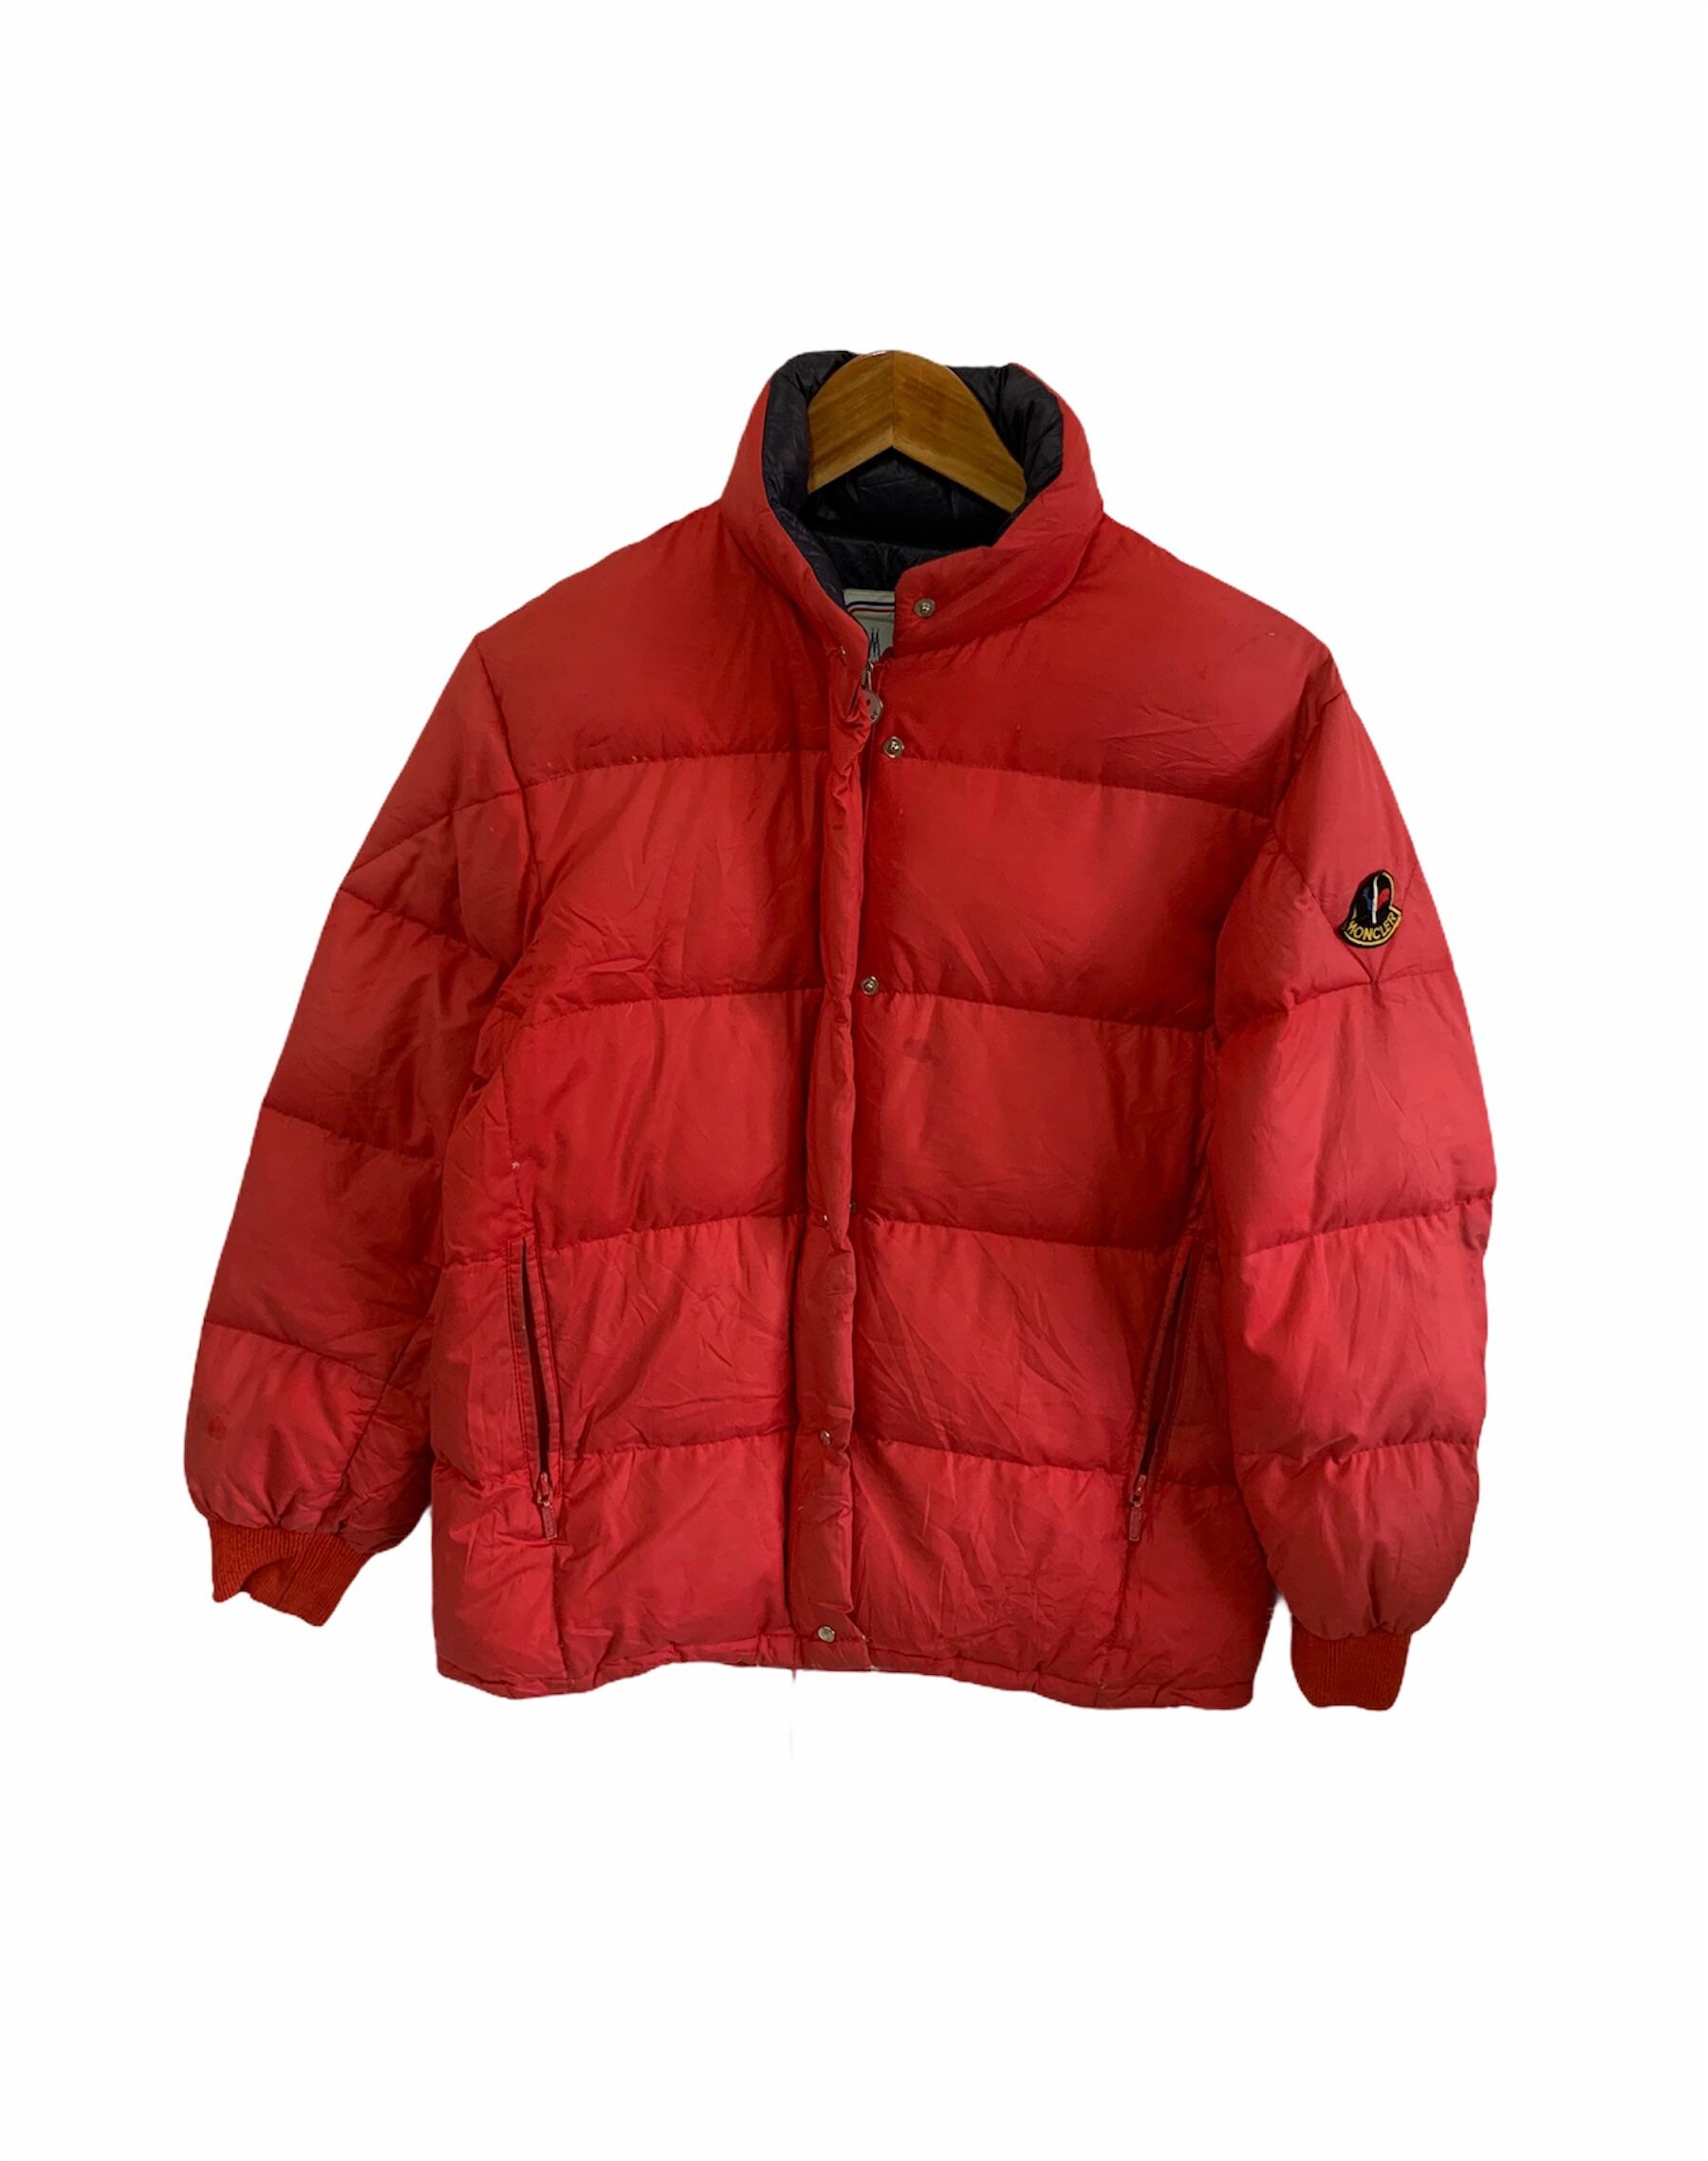 Vintage 80s moncler x asics puffer chaqueta full zip chaqueta | Etsy